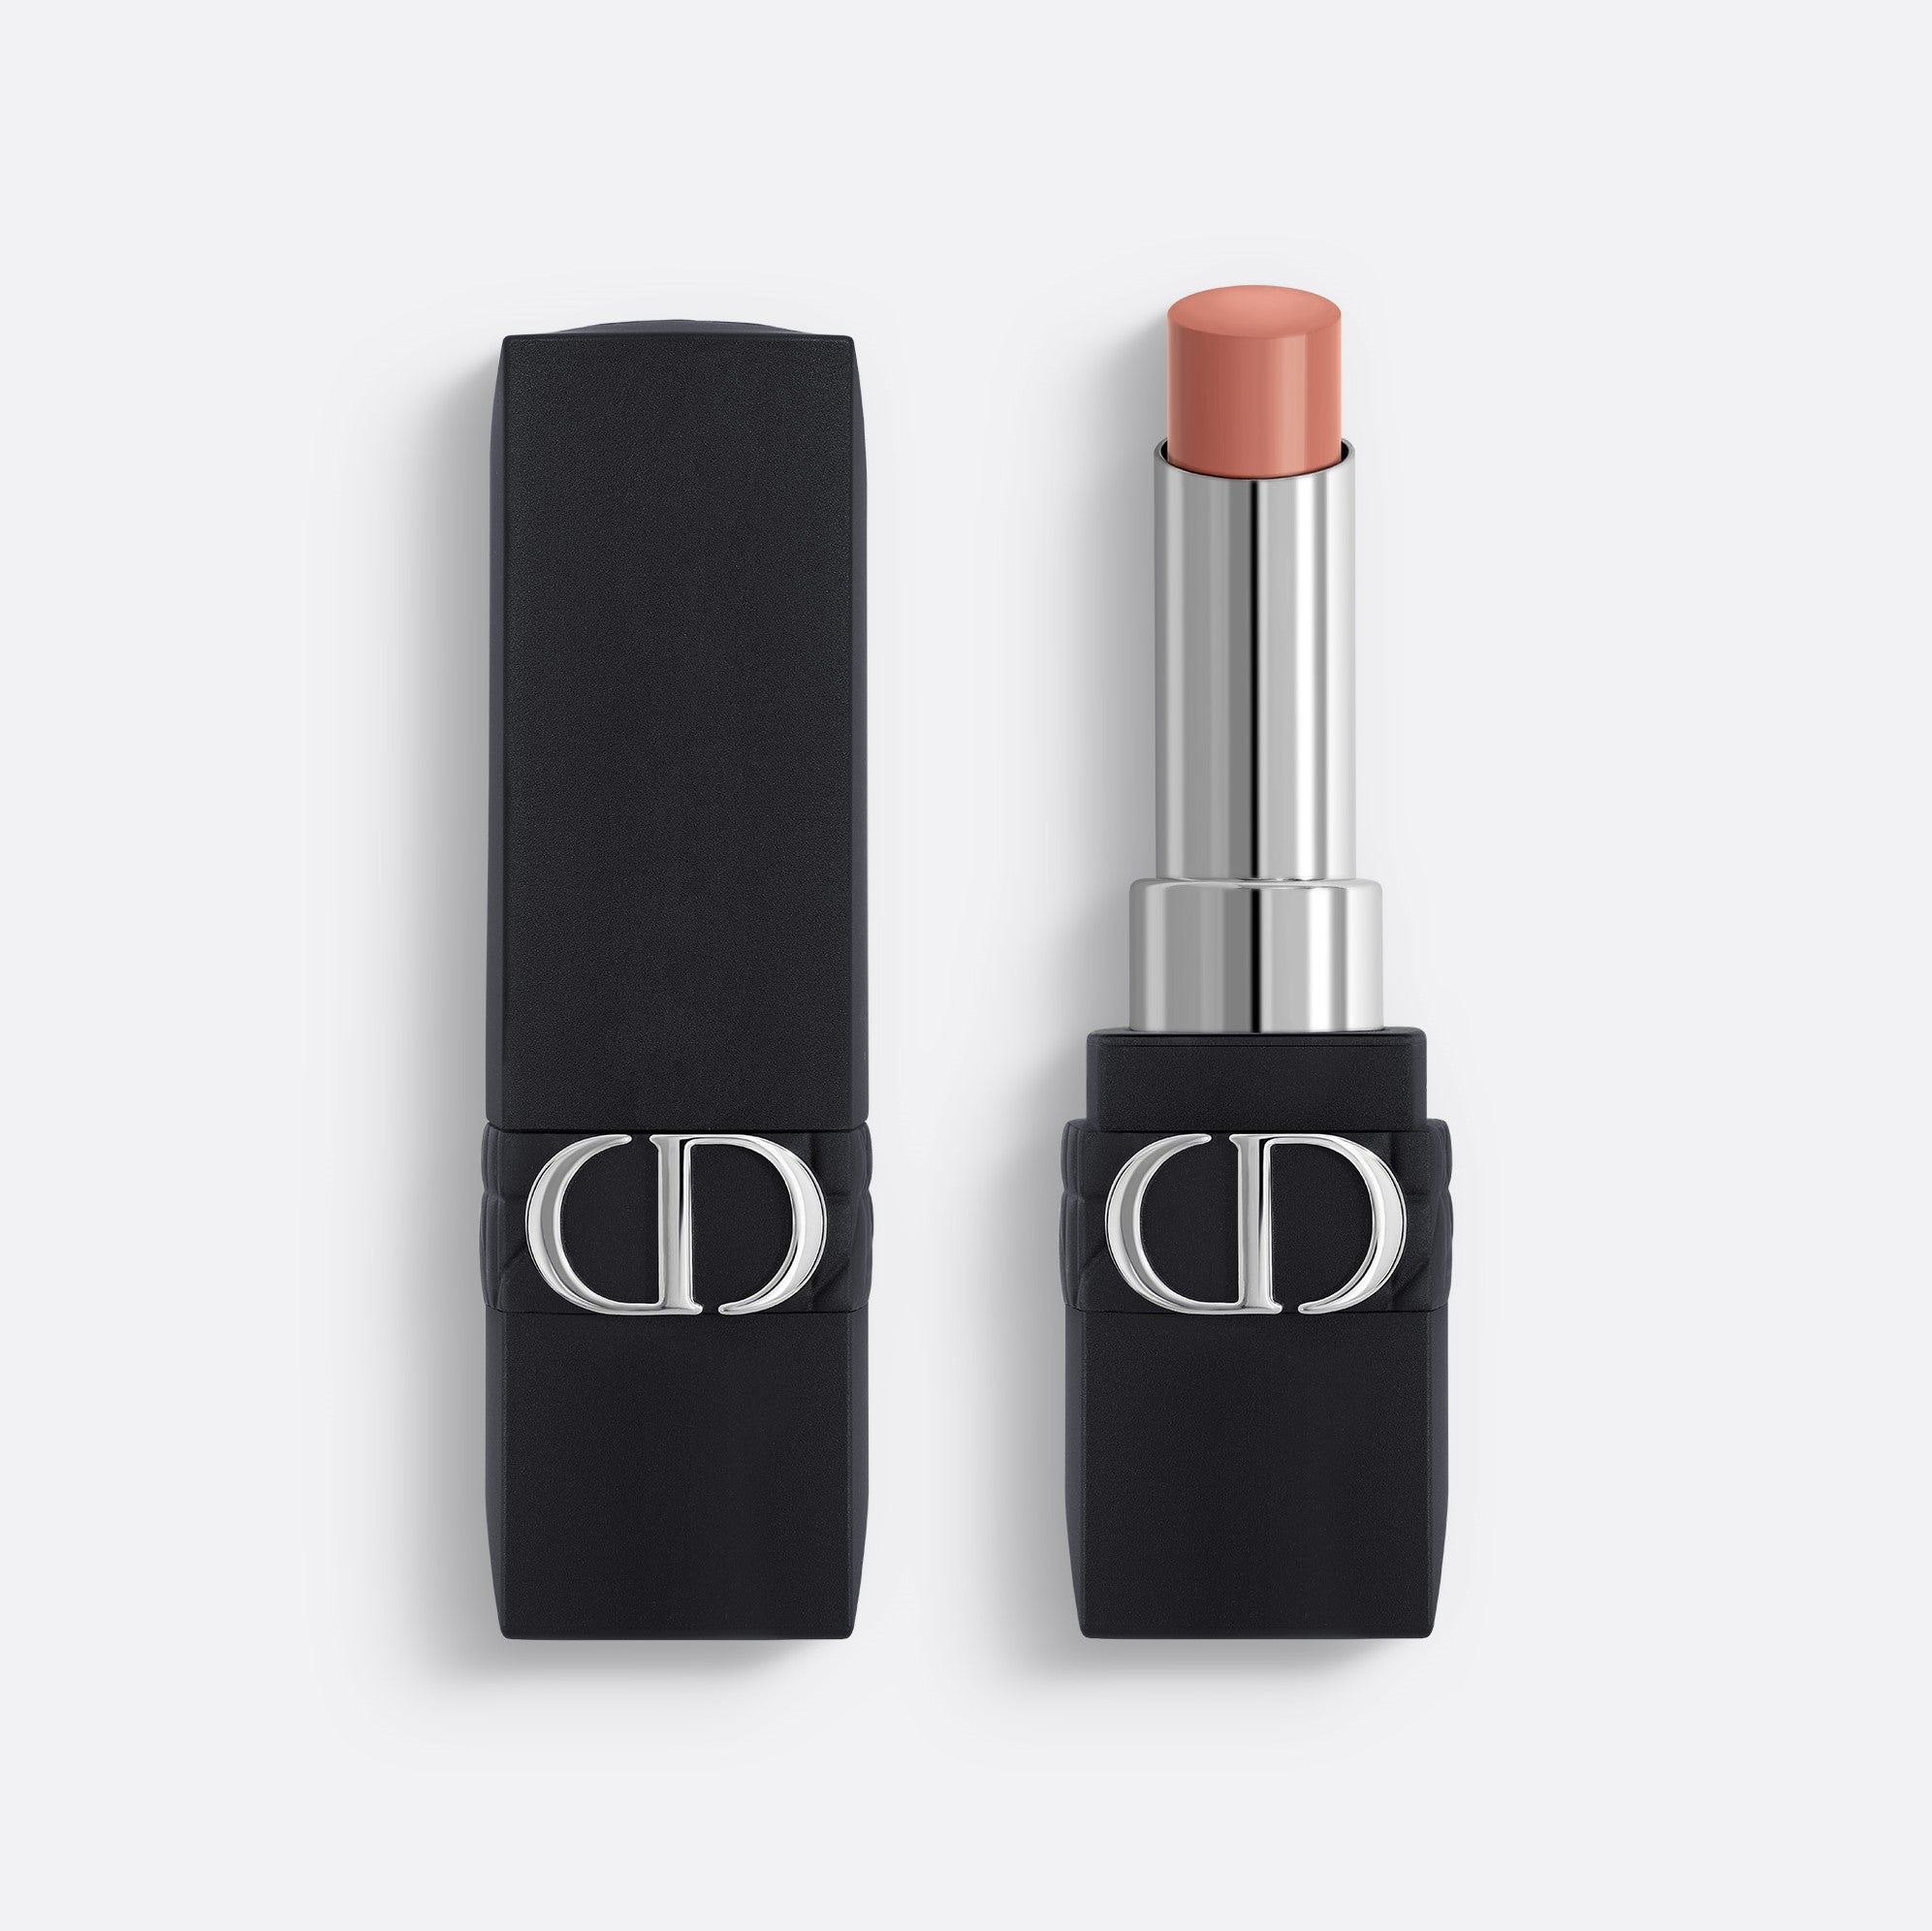 DIOR ADDICT LIP GLOW  ColorAwakening Lip Balm  24h Hydration  97   Dior Beauty Online Boutique Singapore